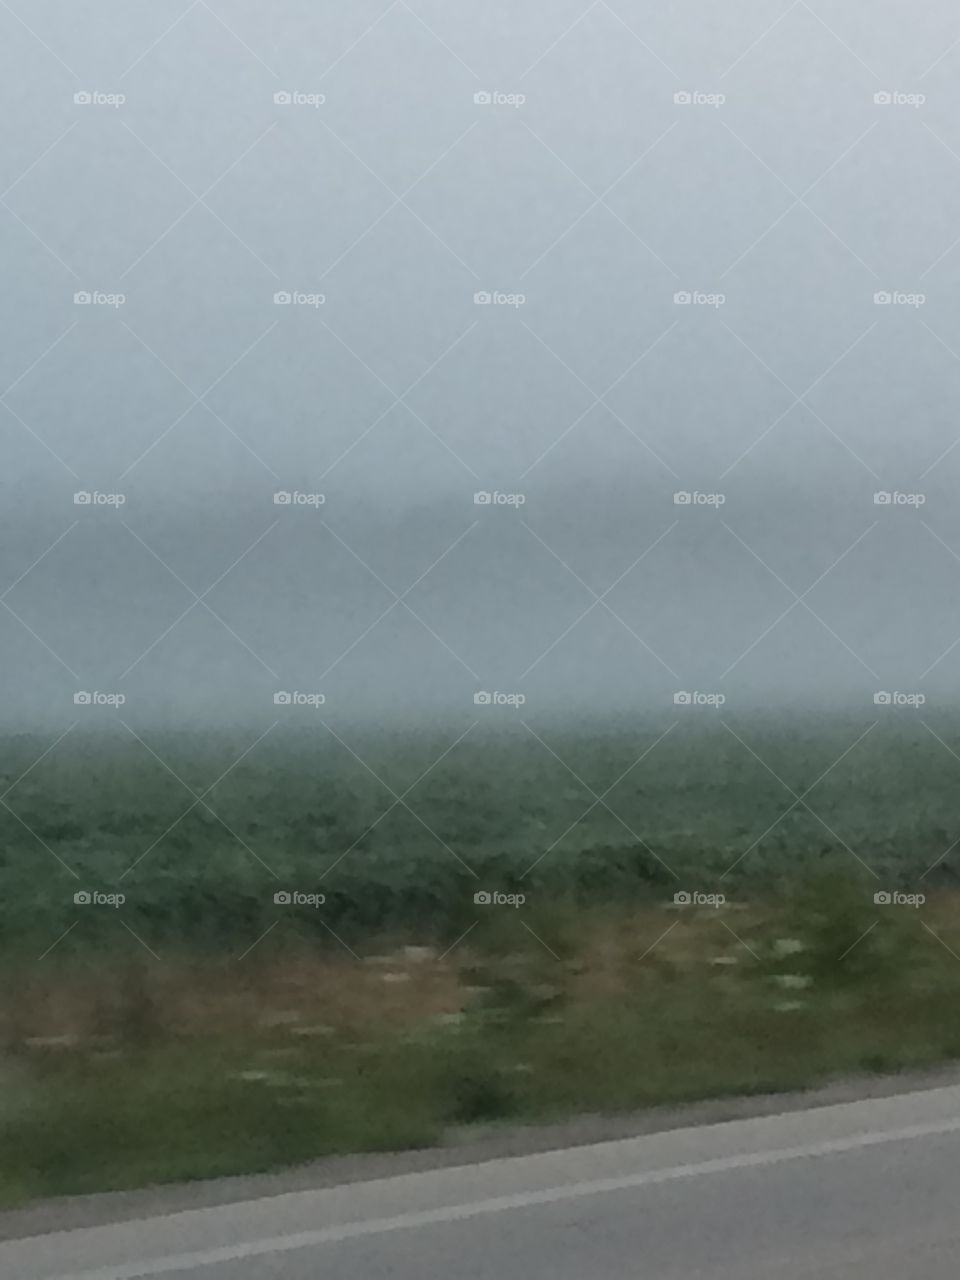 Foggy scenery